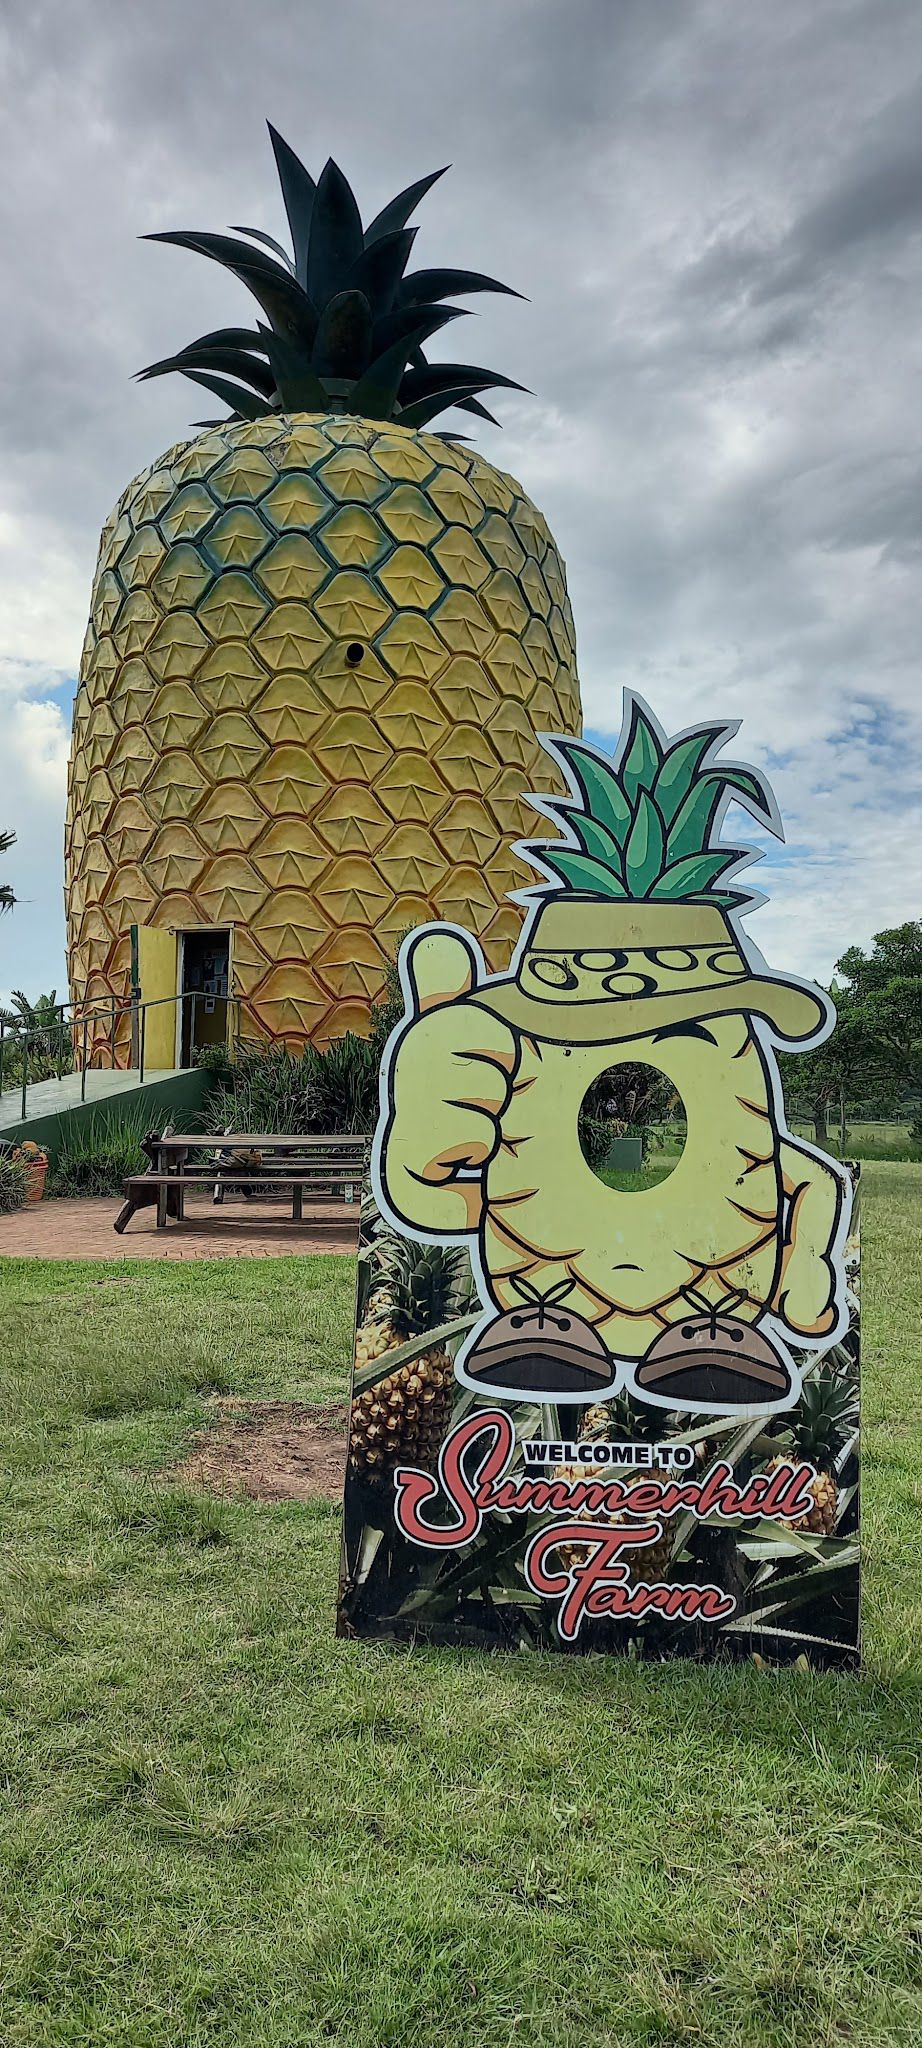  The Big Pineapple